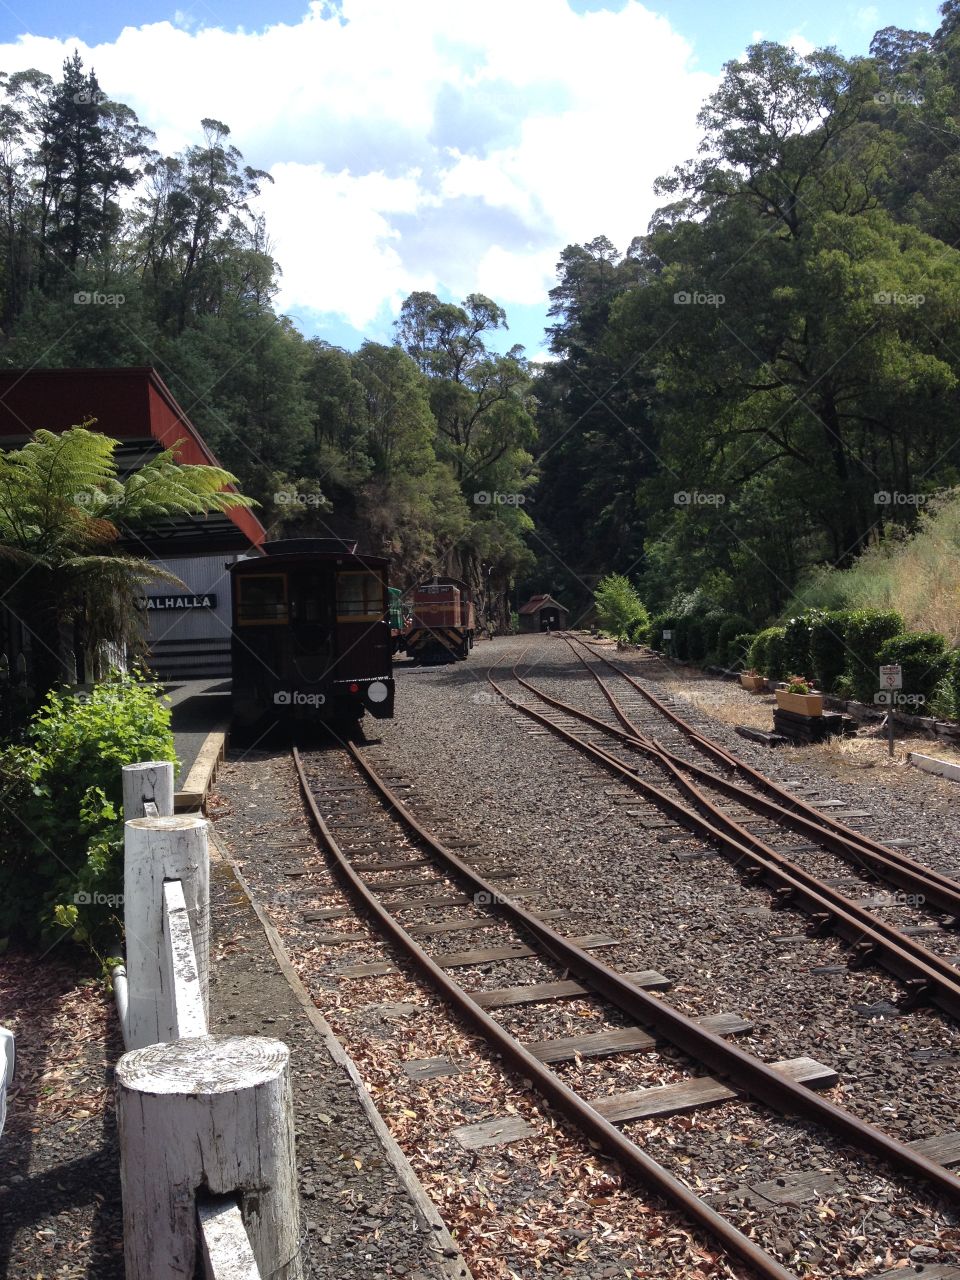 Walhalla original vintage trains, Biggest gold mining town in Victoria in the 18th century